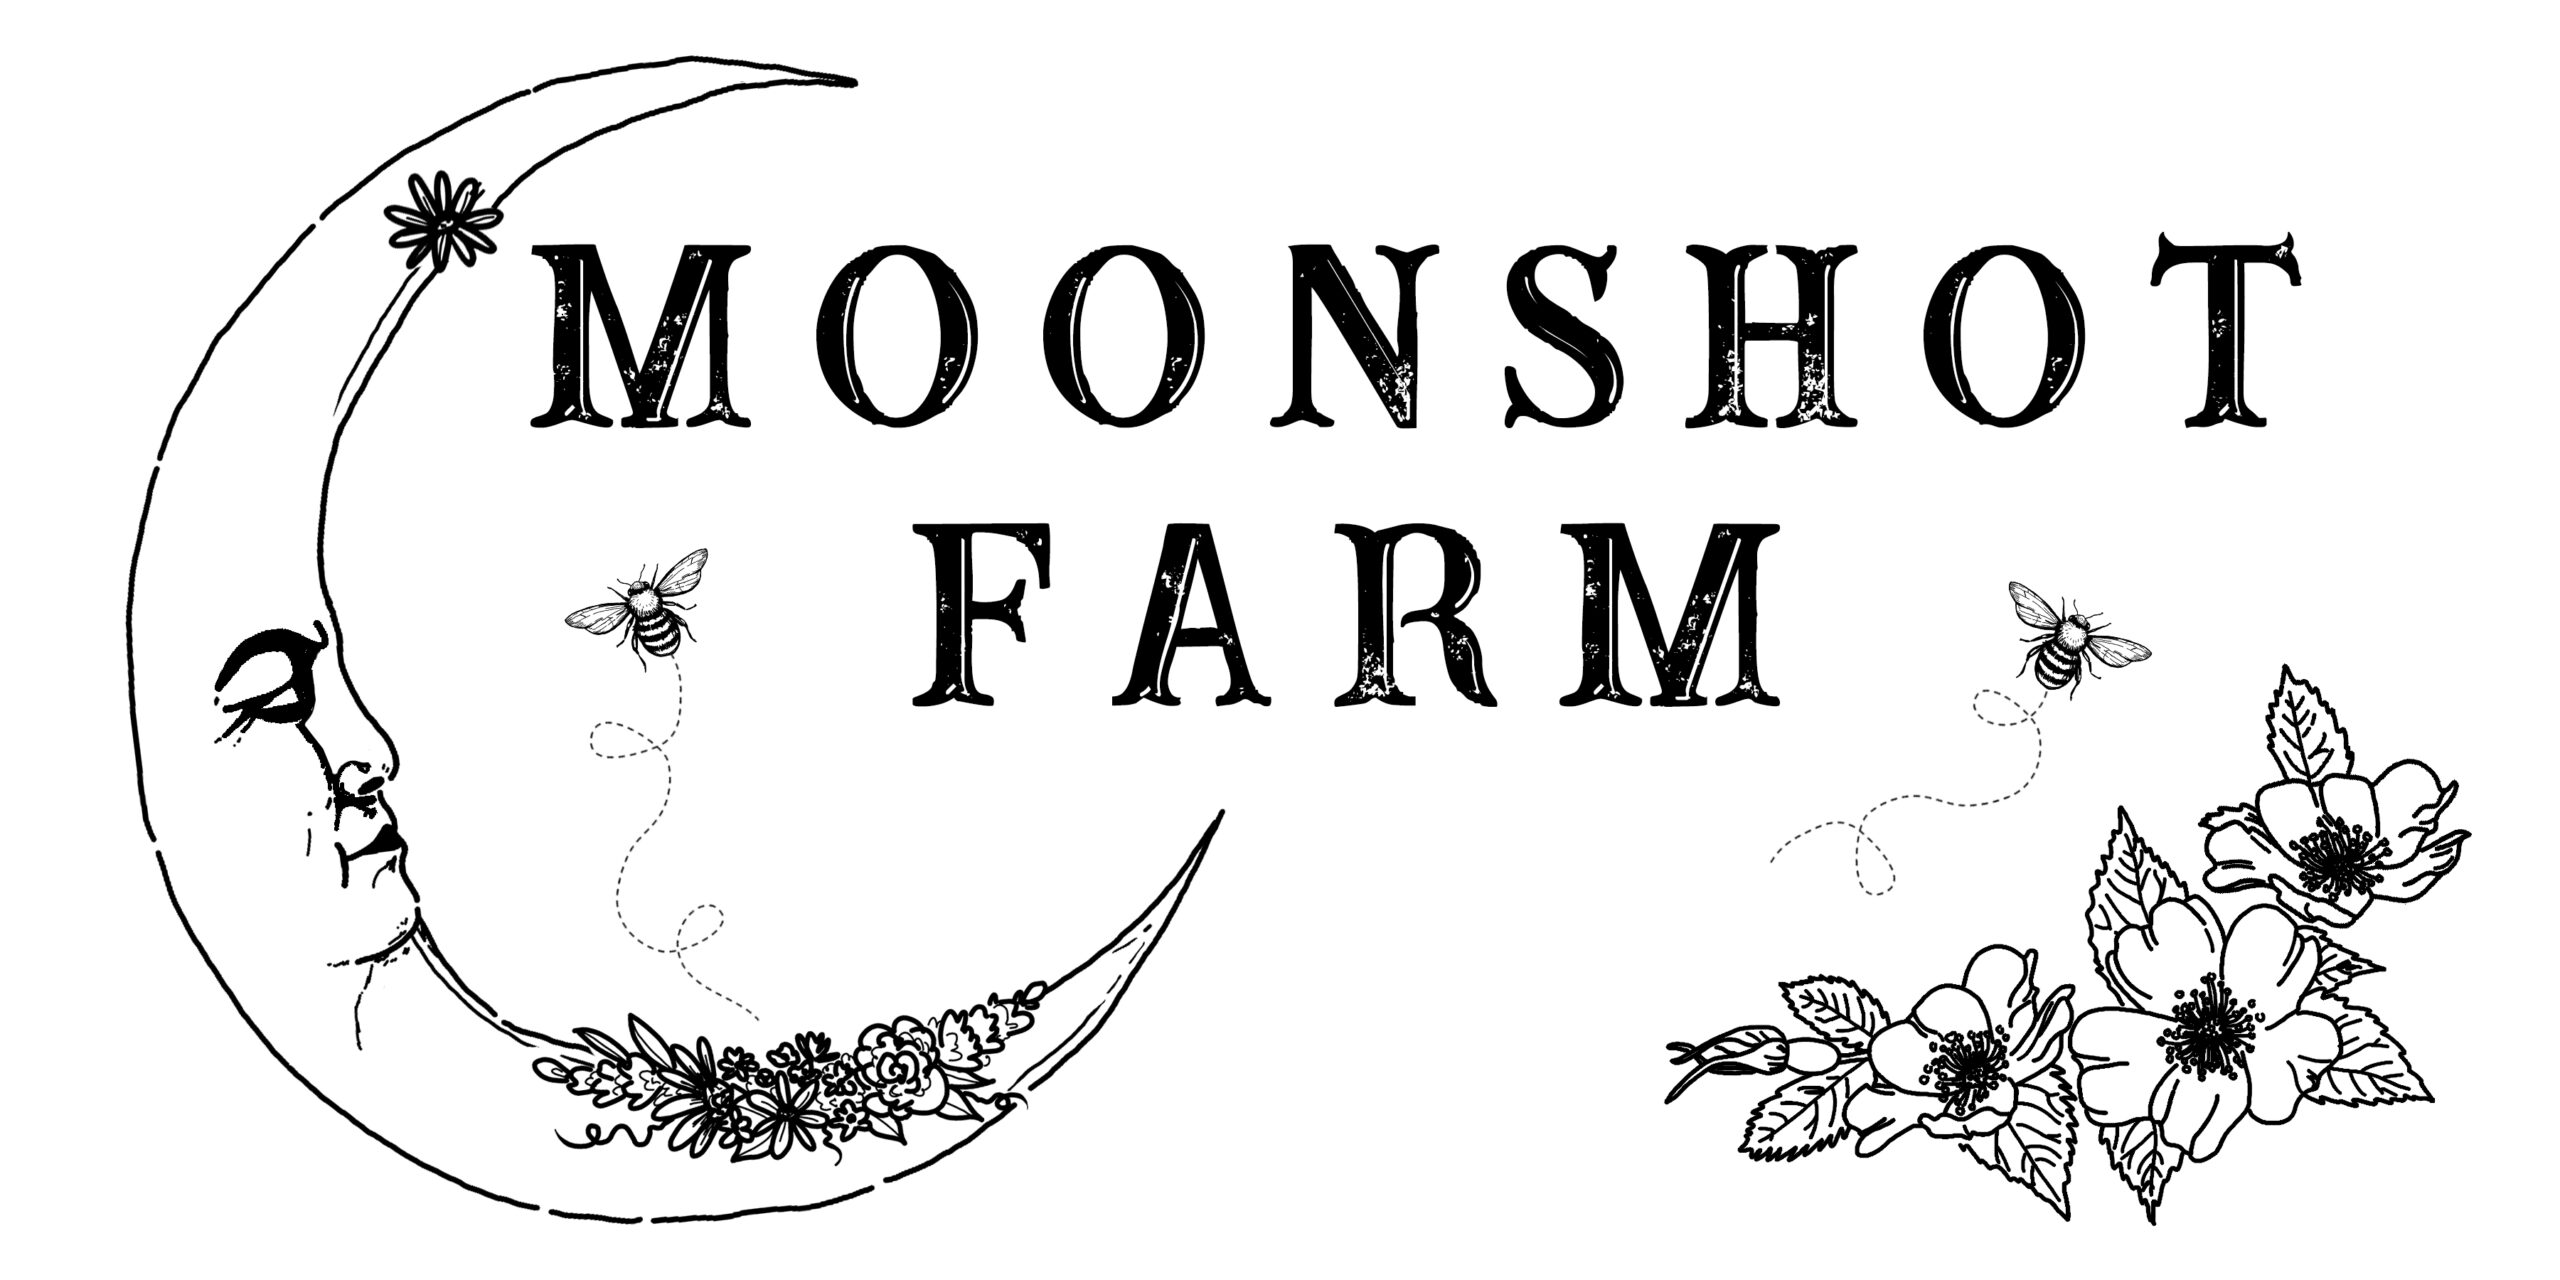 moonshot farm logo_final